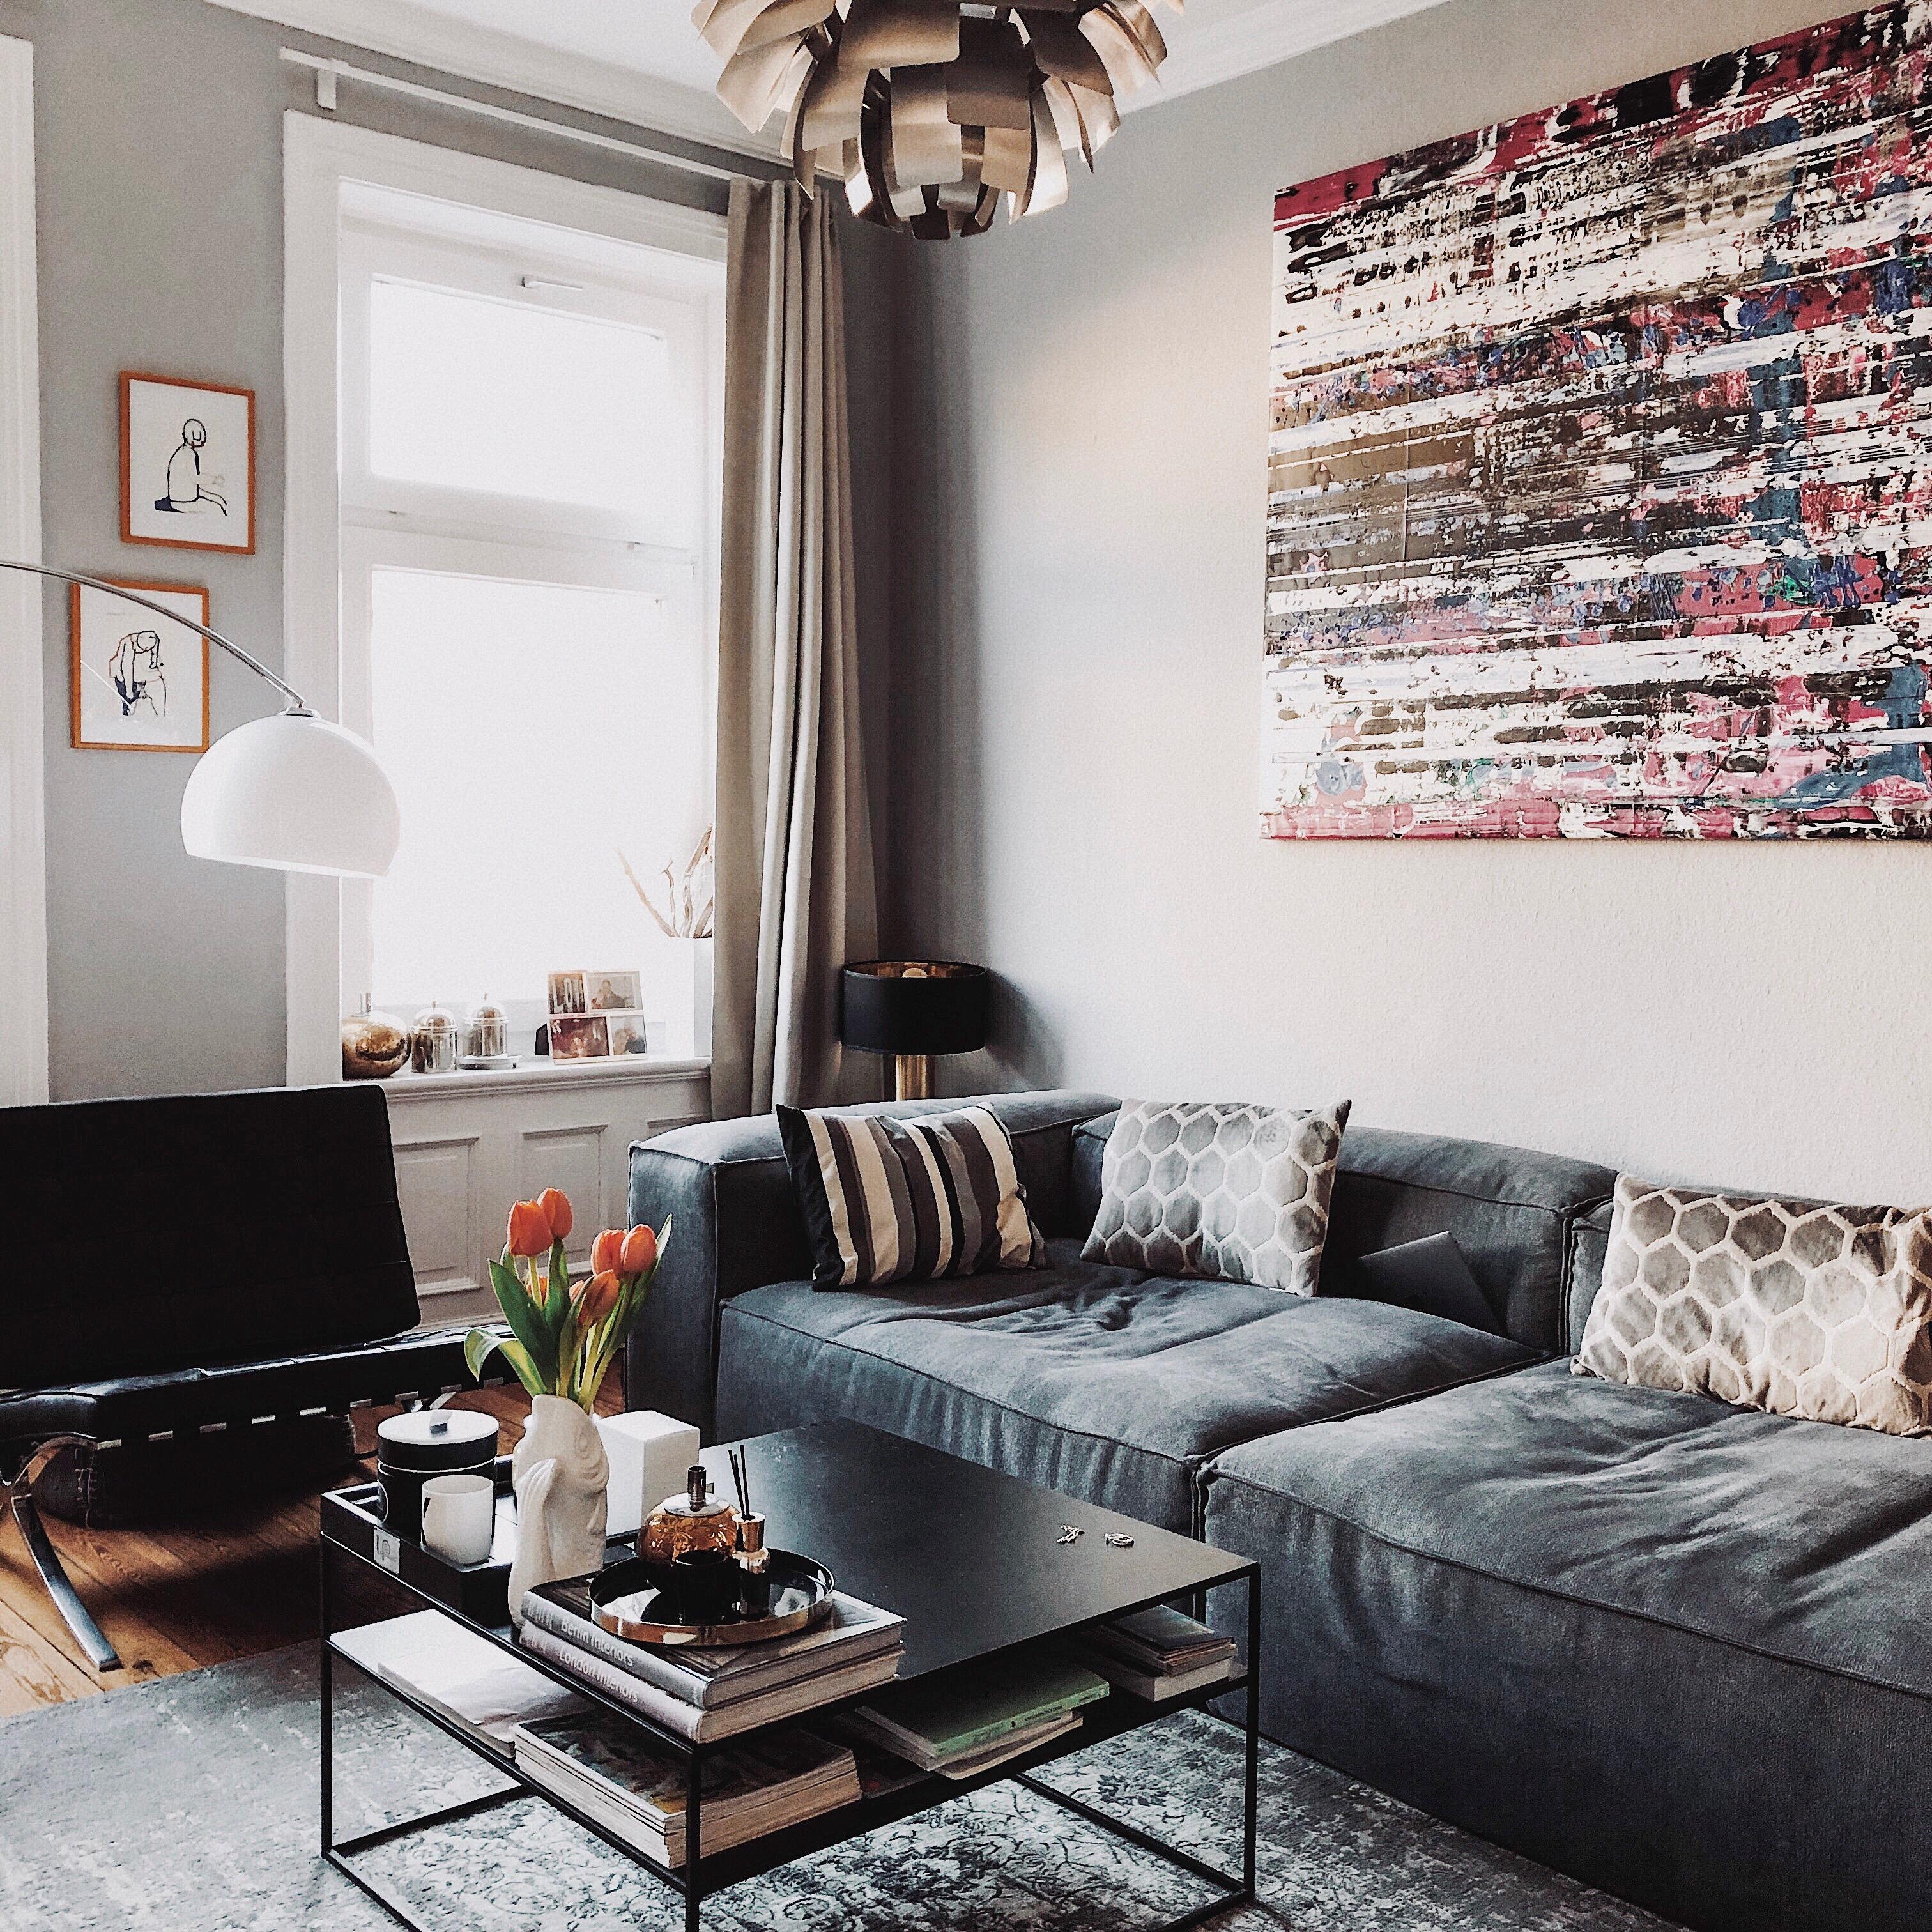 Home #danishdesign #couchtable #lampe #kunst #blumen #couch #couchstyle #living #homedecor